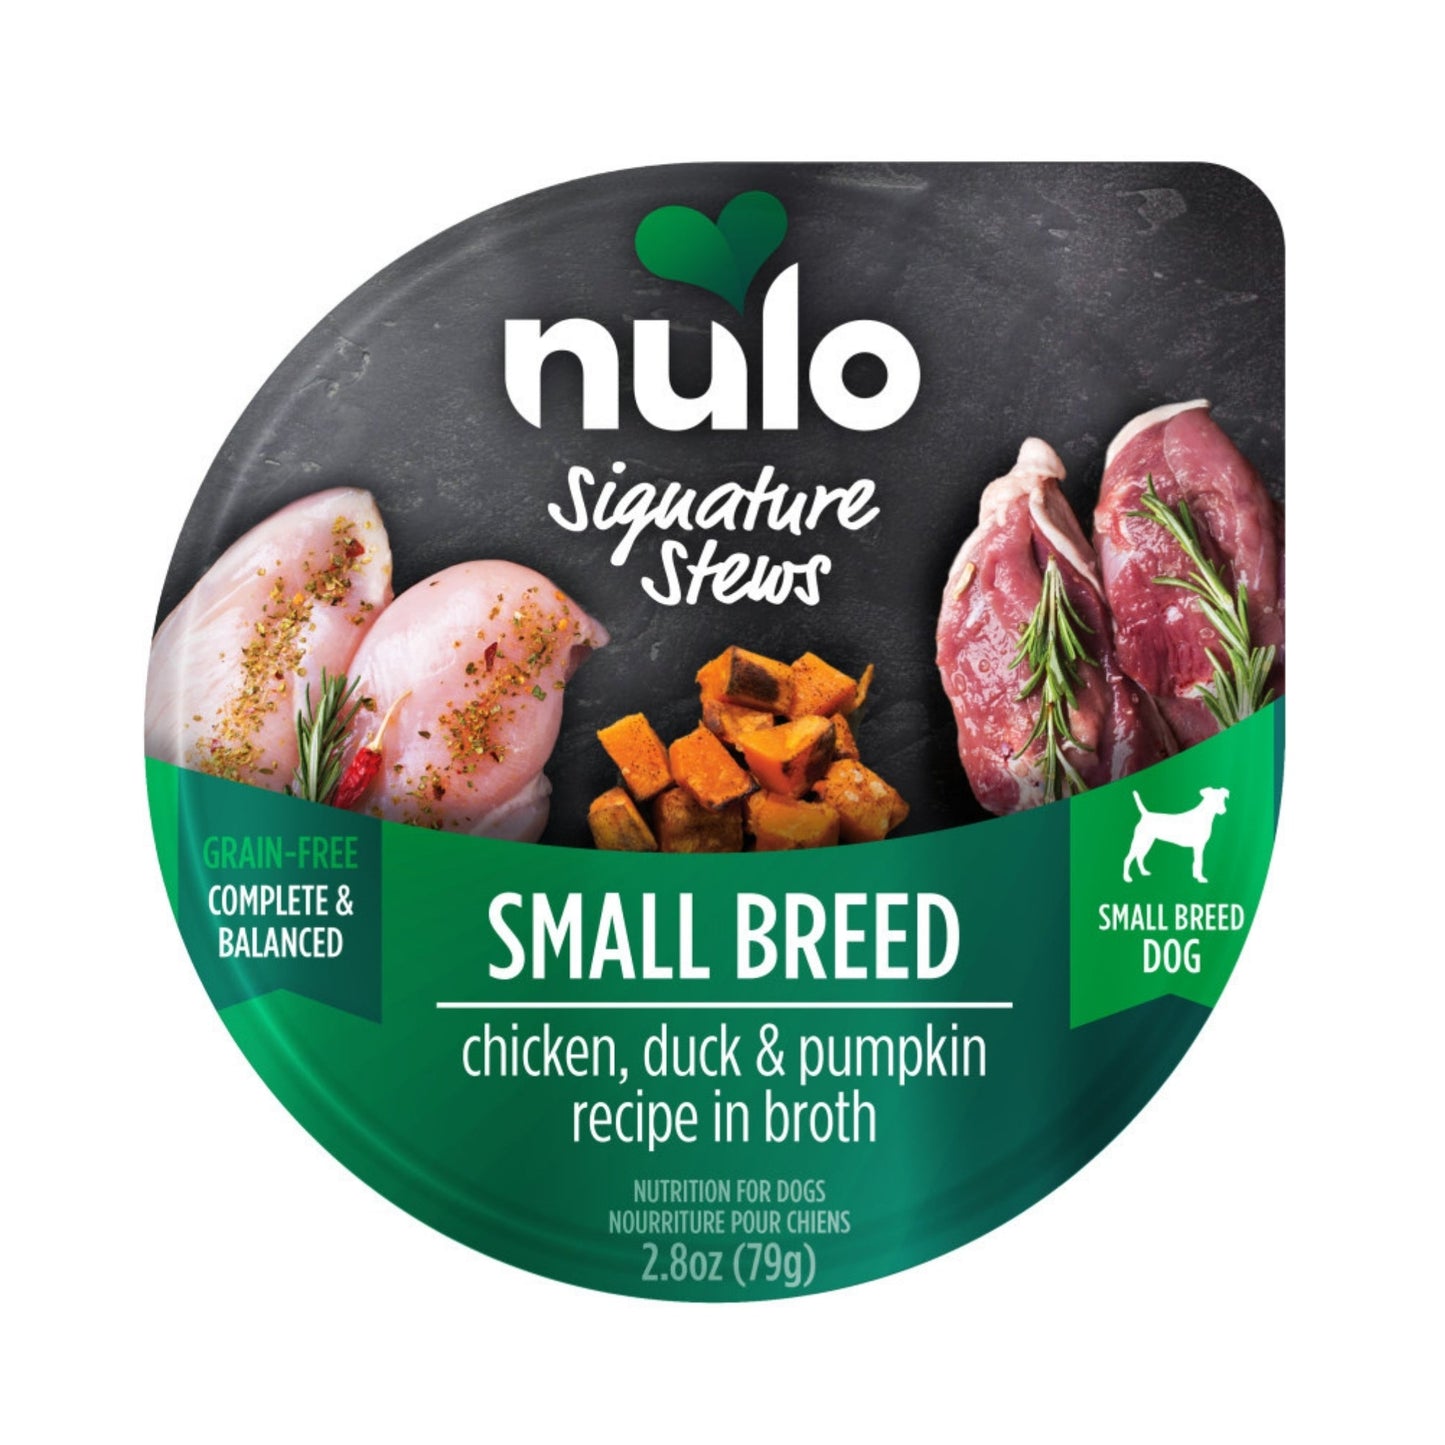 Nulo Signature Stew Small Breed Dog Food Chicken, Duck & Pumpkin 2.8oz. (Case of 24)